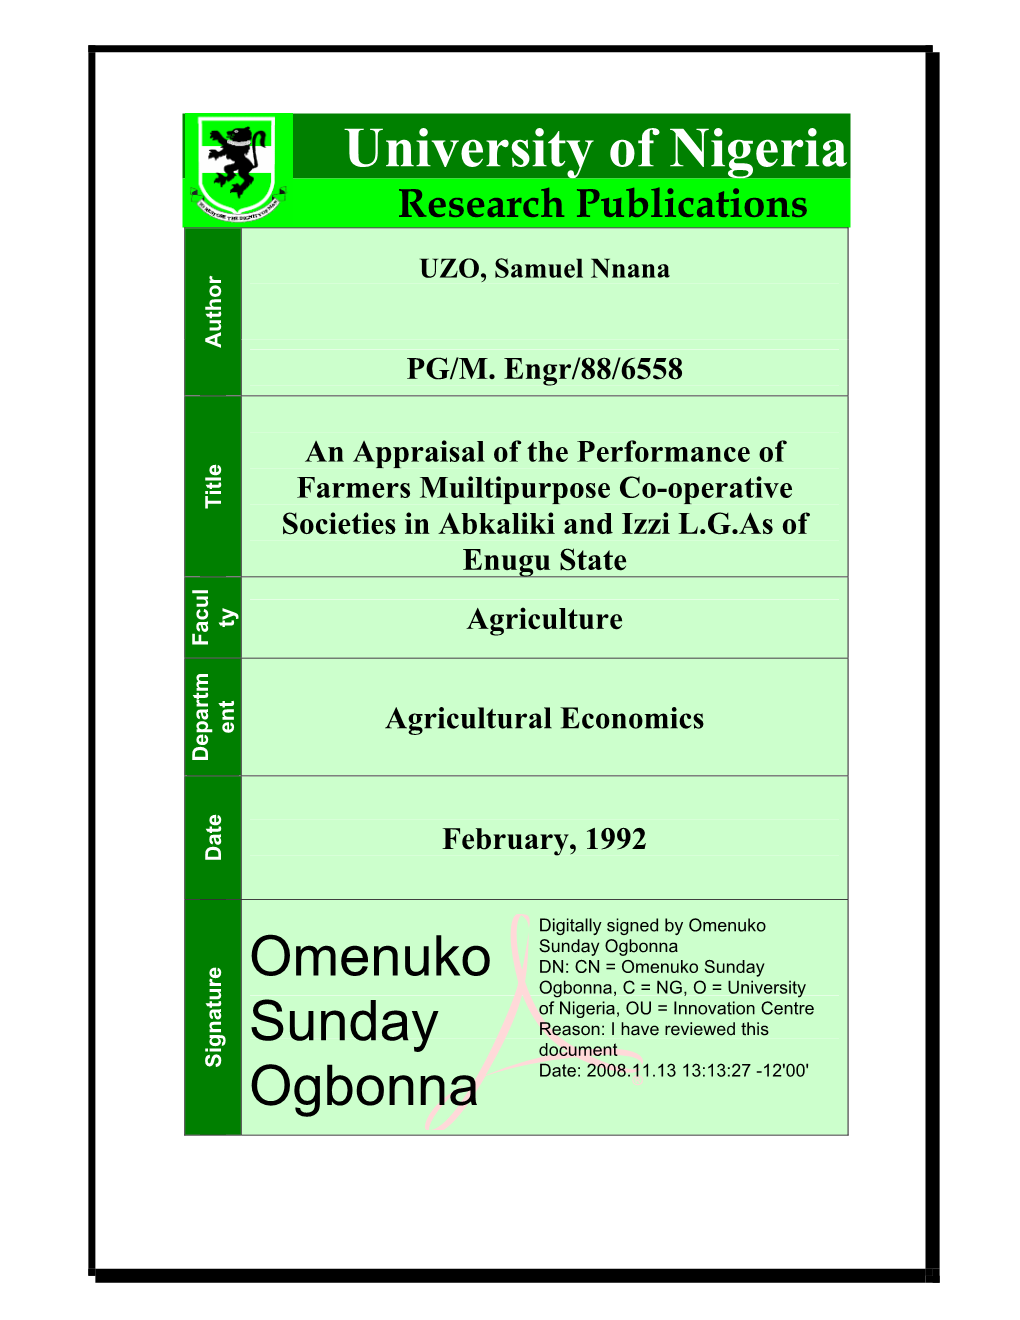 University of Nigeria Omenuko Sunday Ogbonna